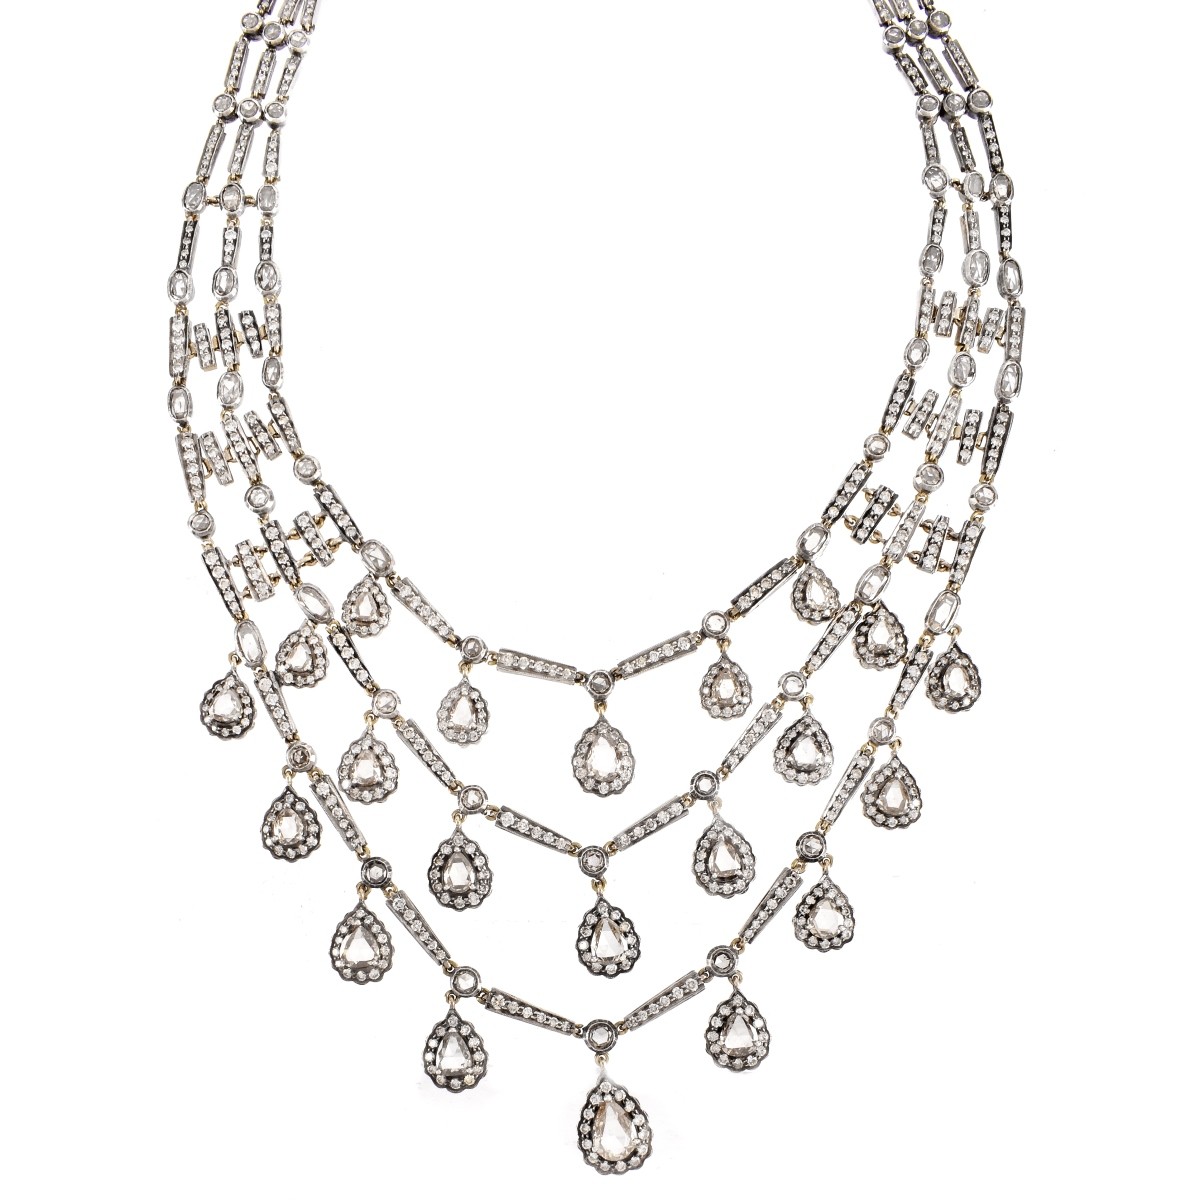 Antique 100ct TW Light Brown Diamond Necklace